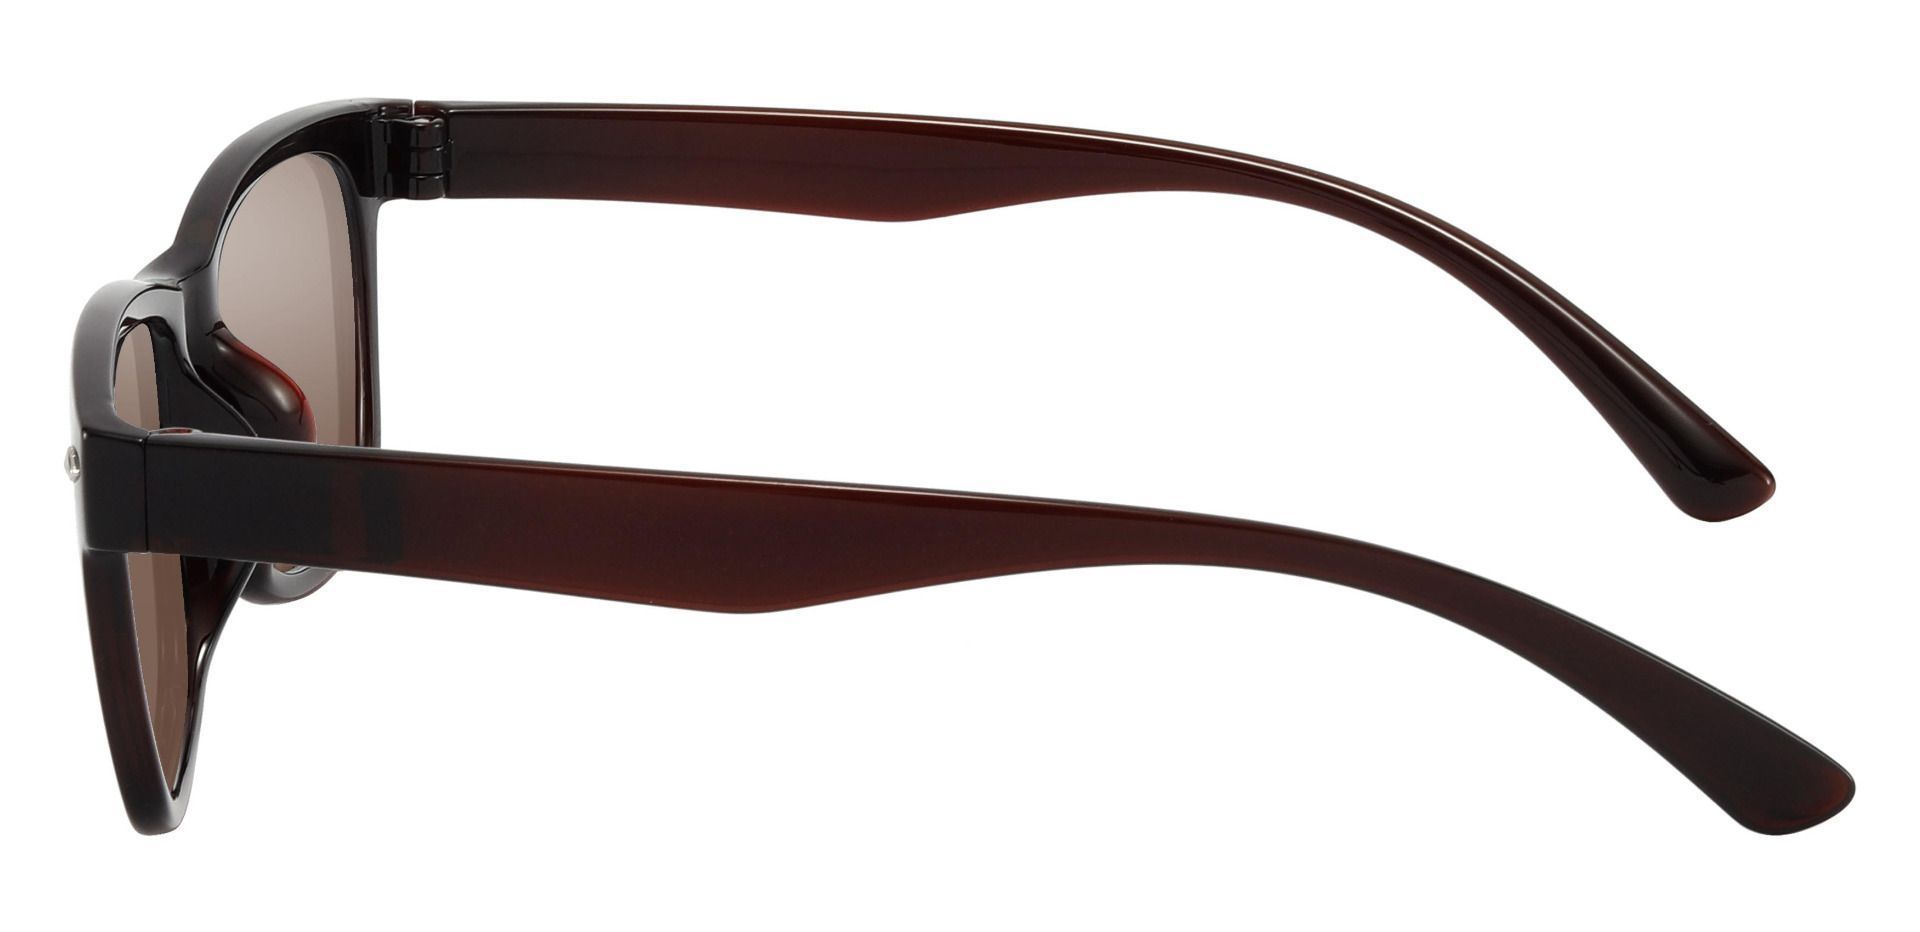 Shaler Square Prescription Sunglasses - Red Frame With Brown Lenses